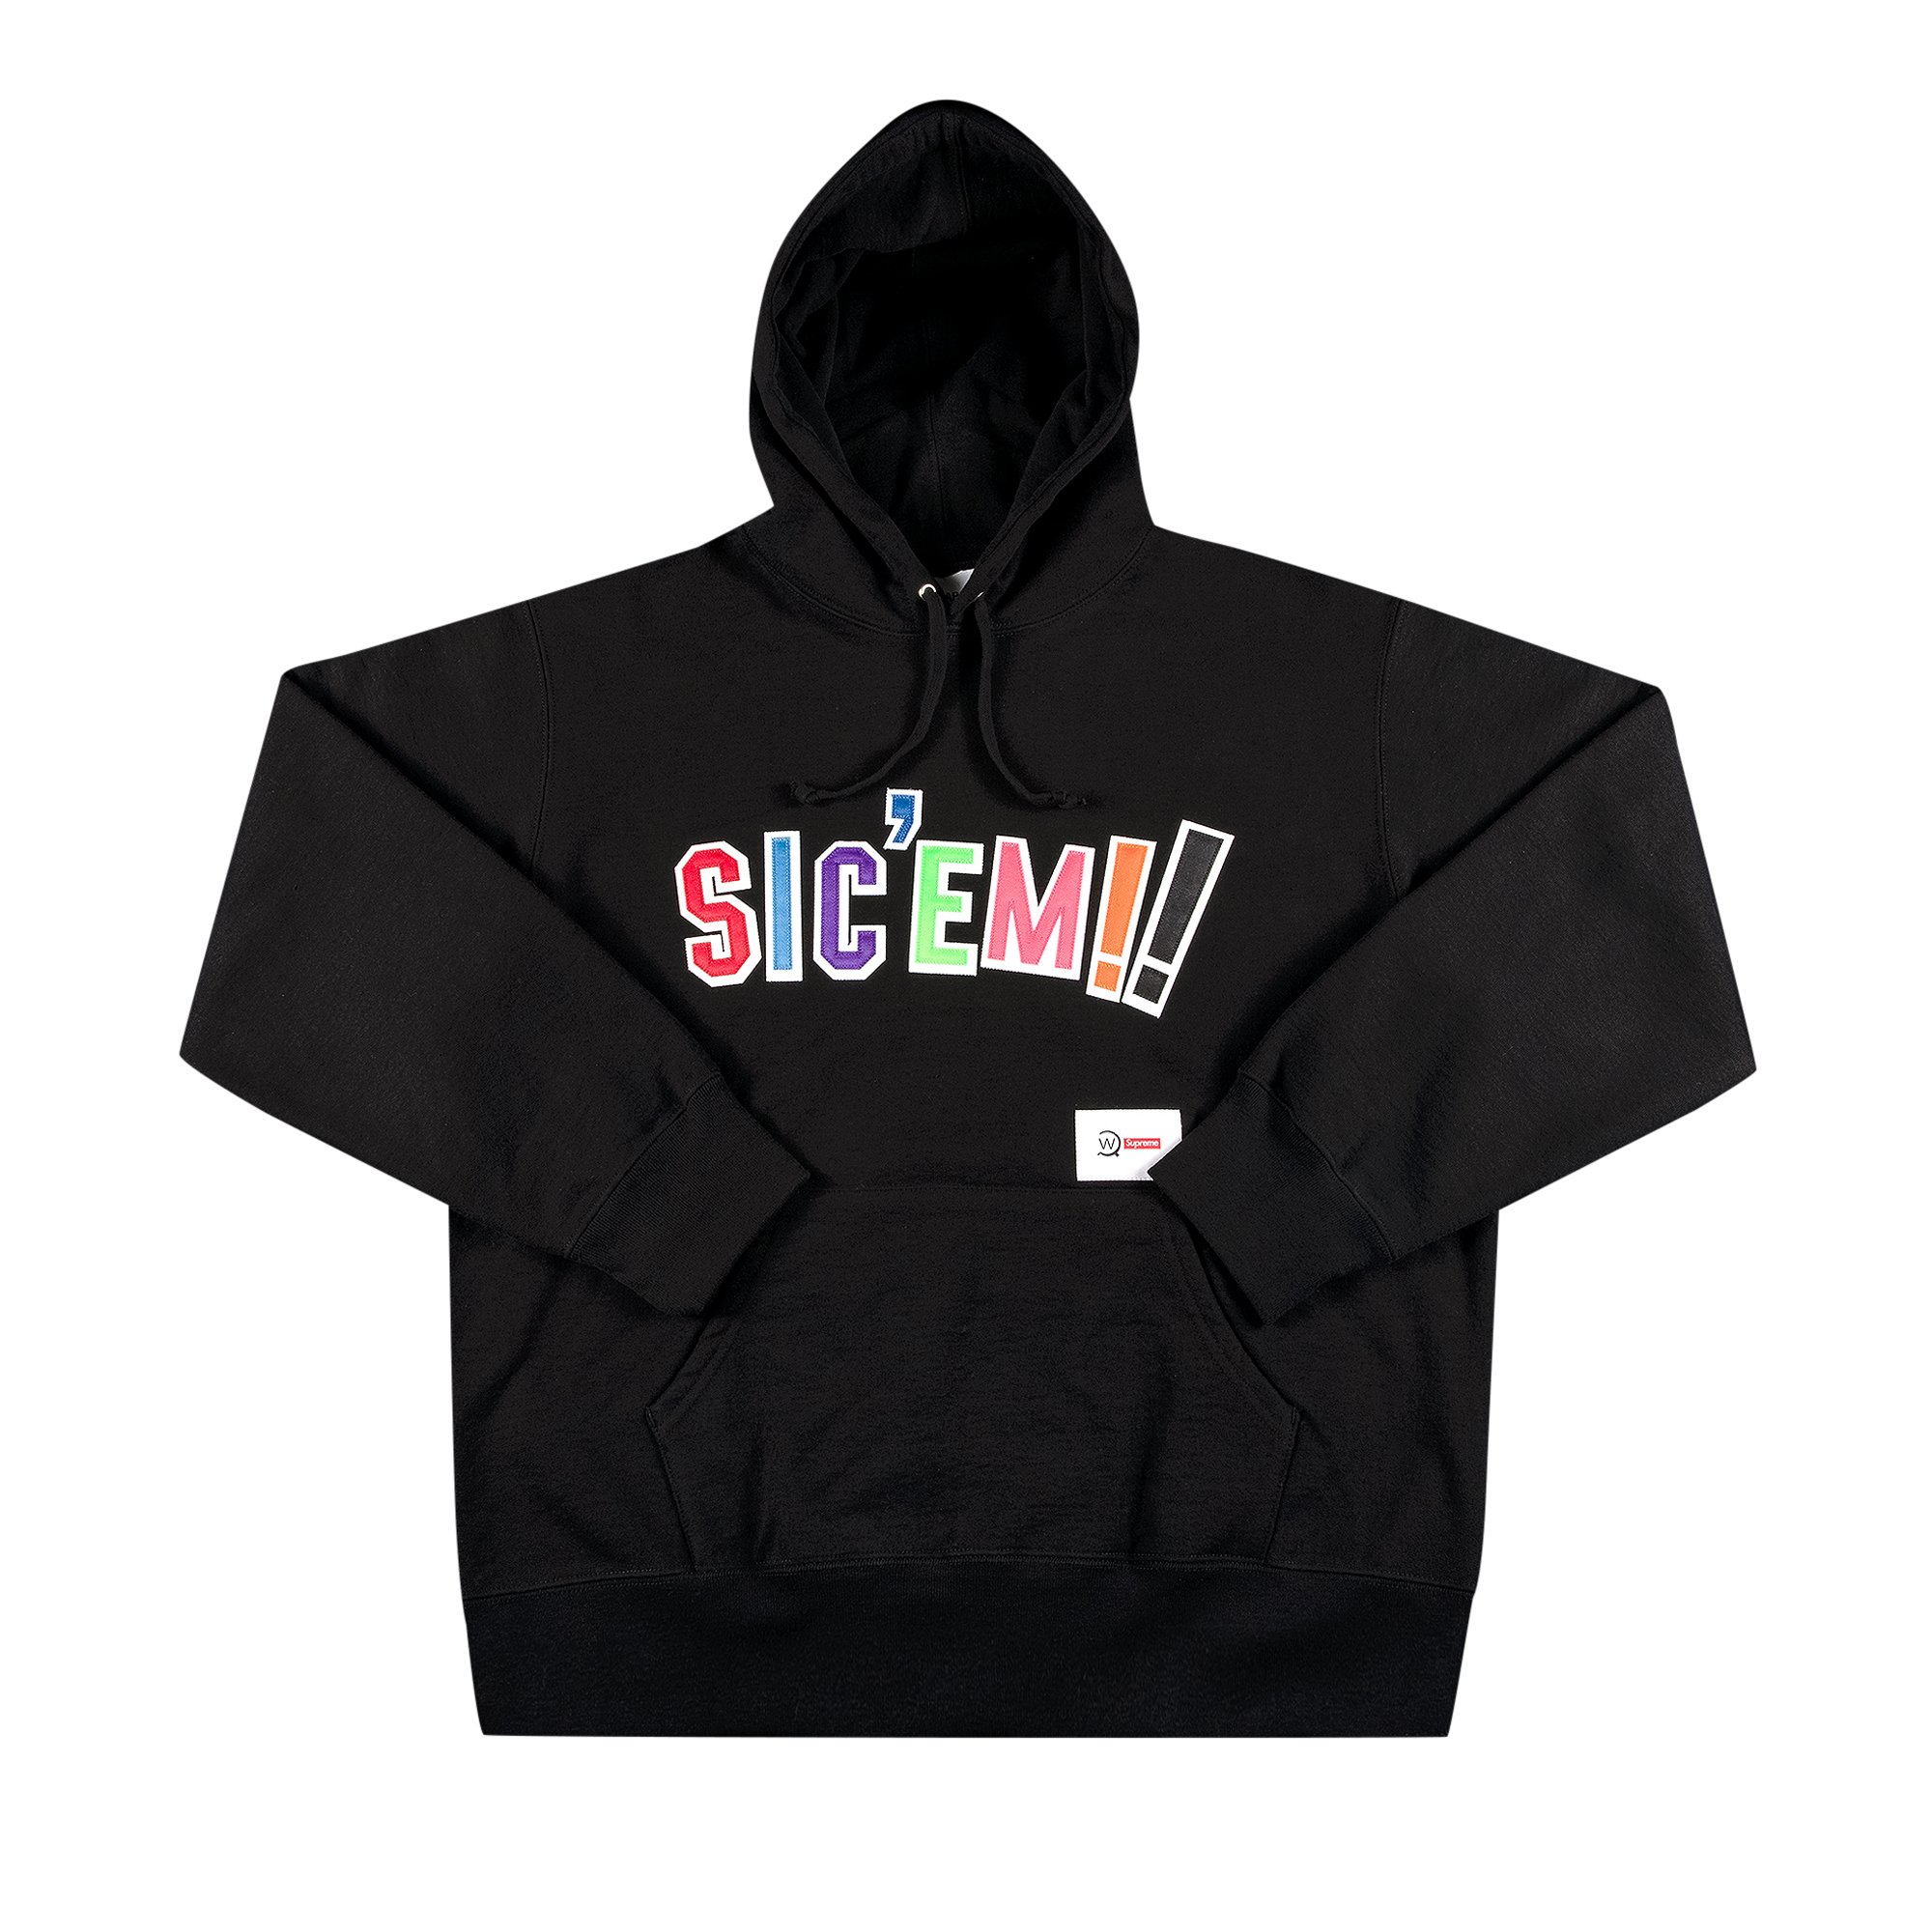 Supreme x WTAPS Sic'em! Hooded Sweatshirt 'Black'